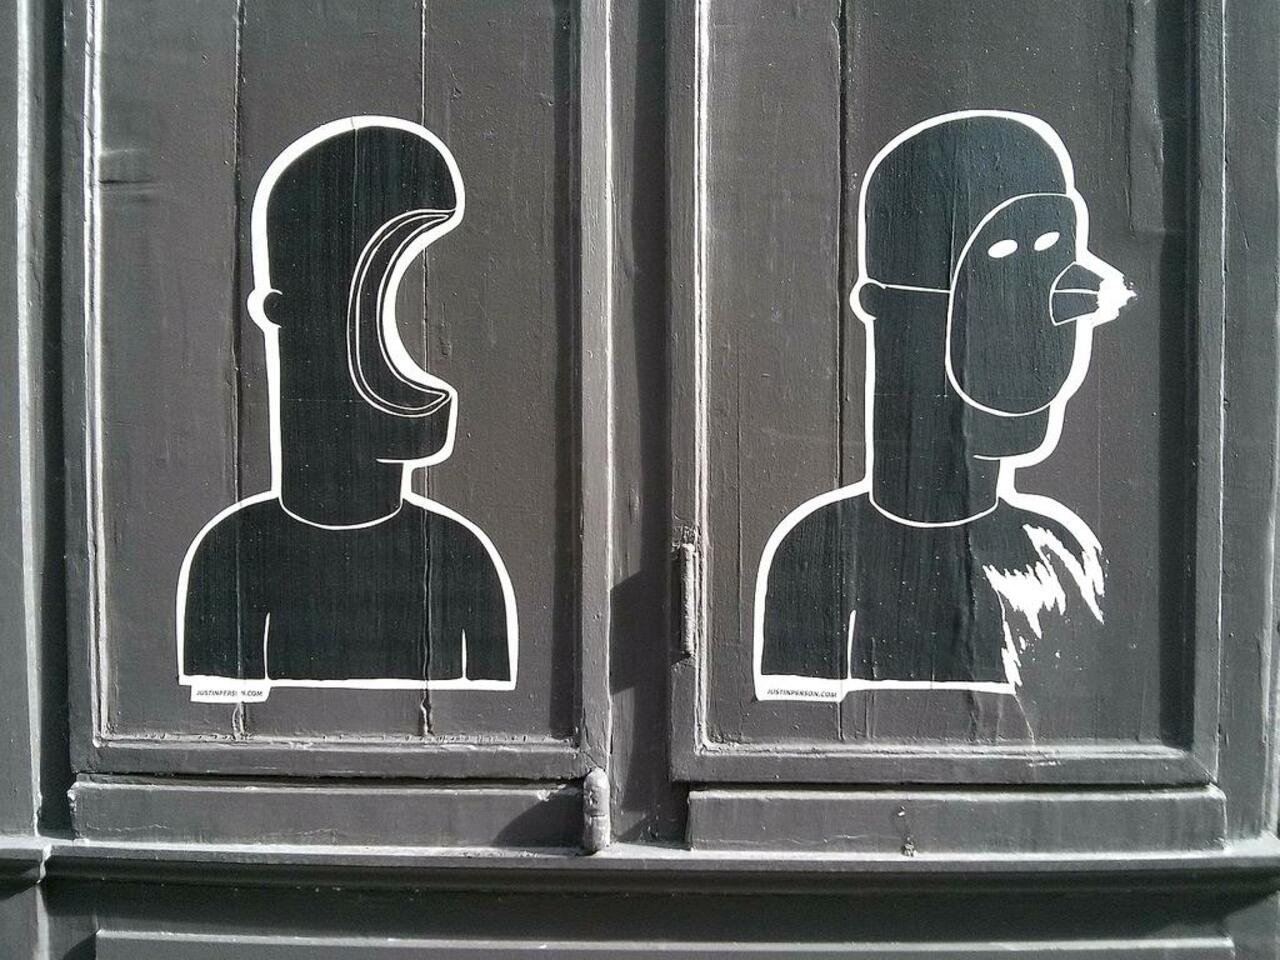 RT @urbacolors: Street Art by Justin Person in #Paris http://www.urbacolors.com #art #mural #graffiti #streetart http://t.co/8AENzLjeTg